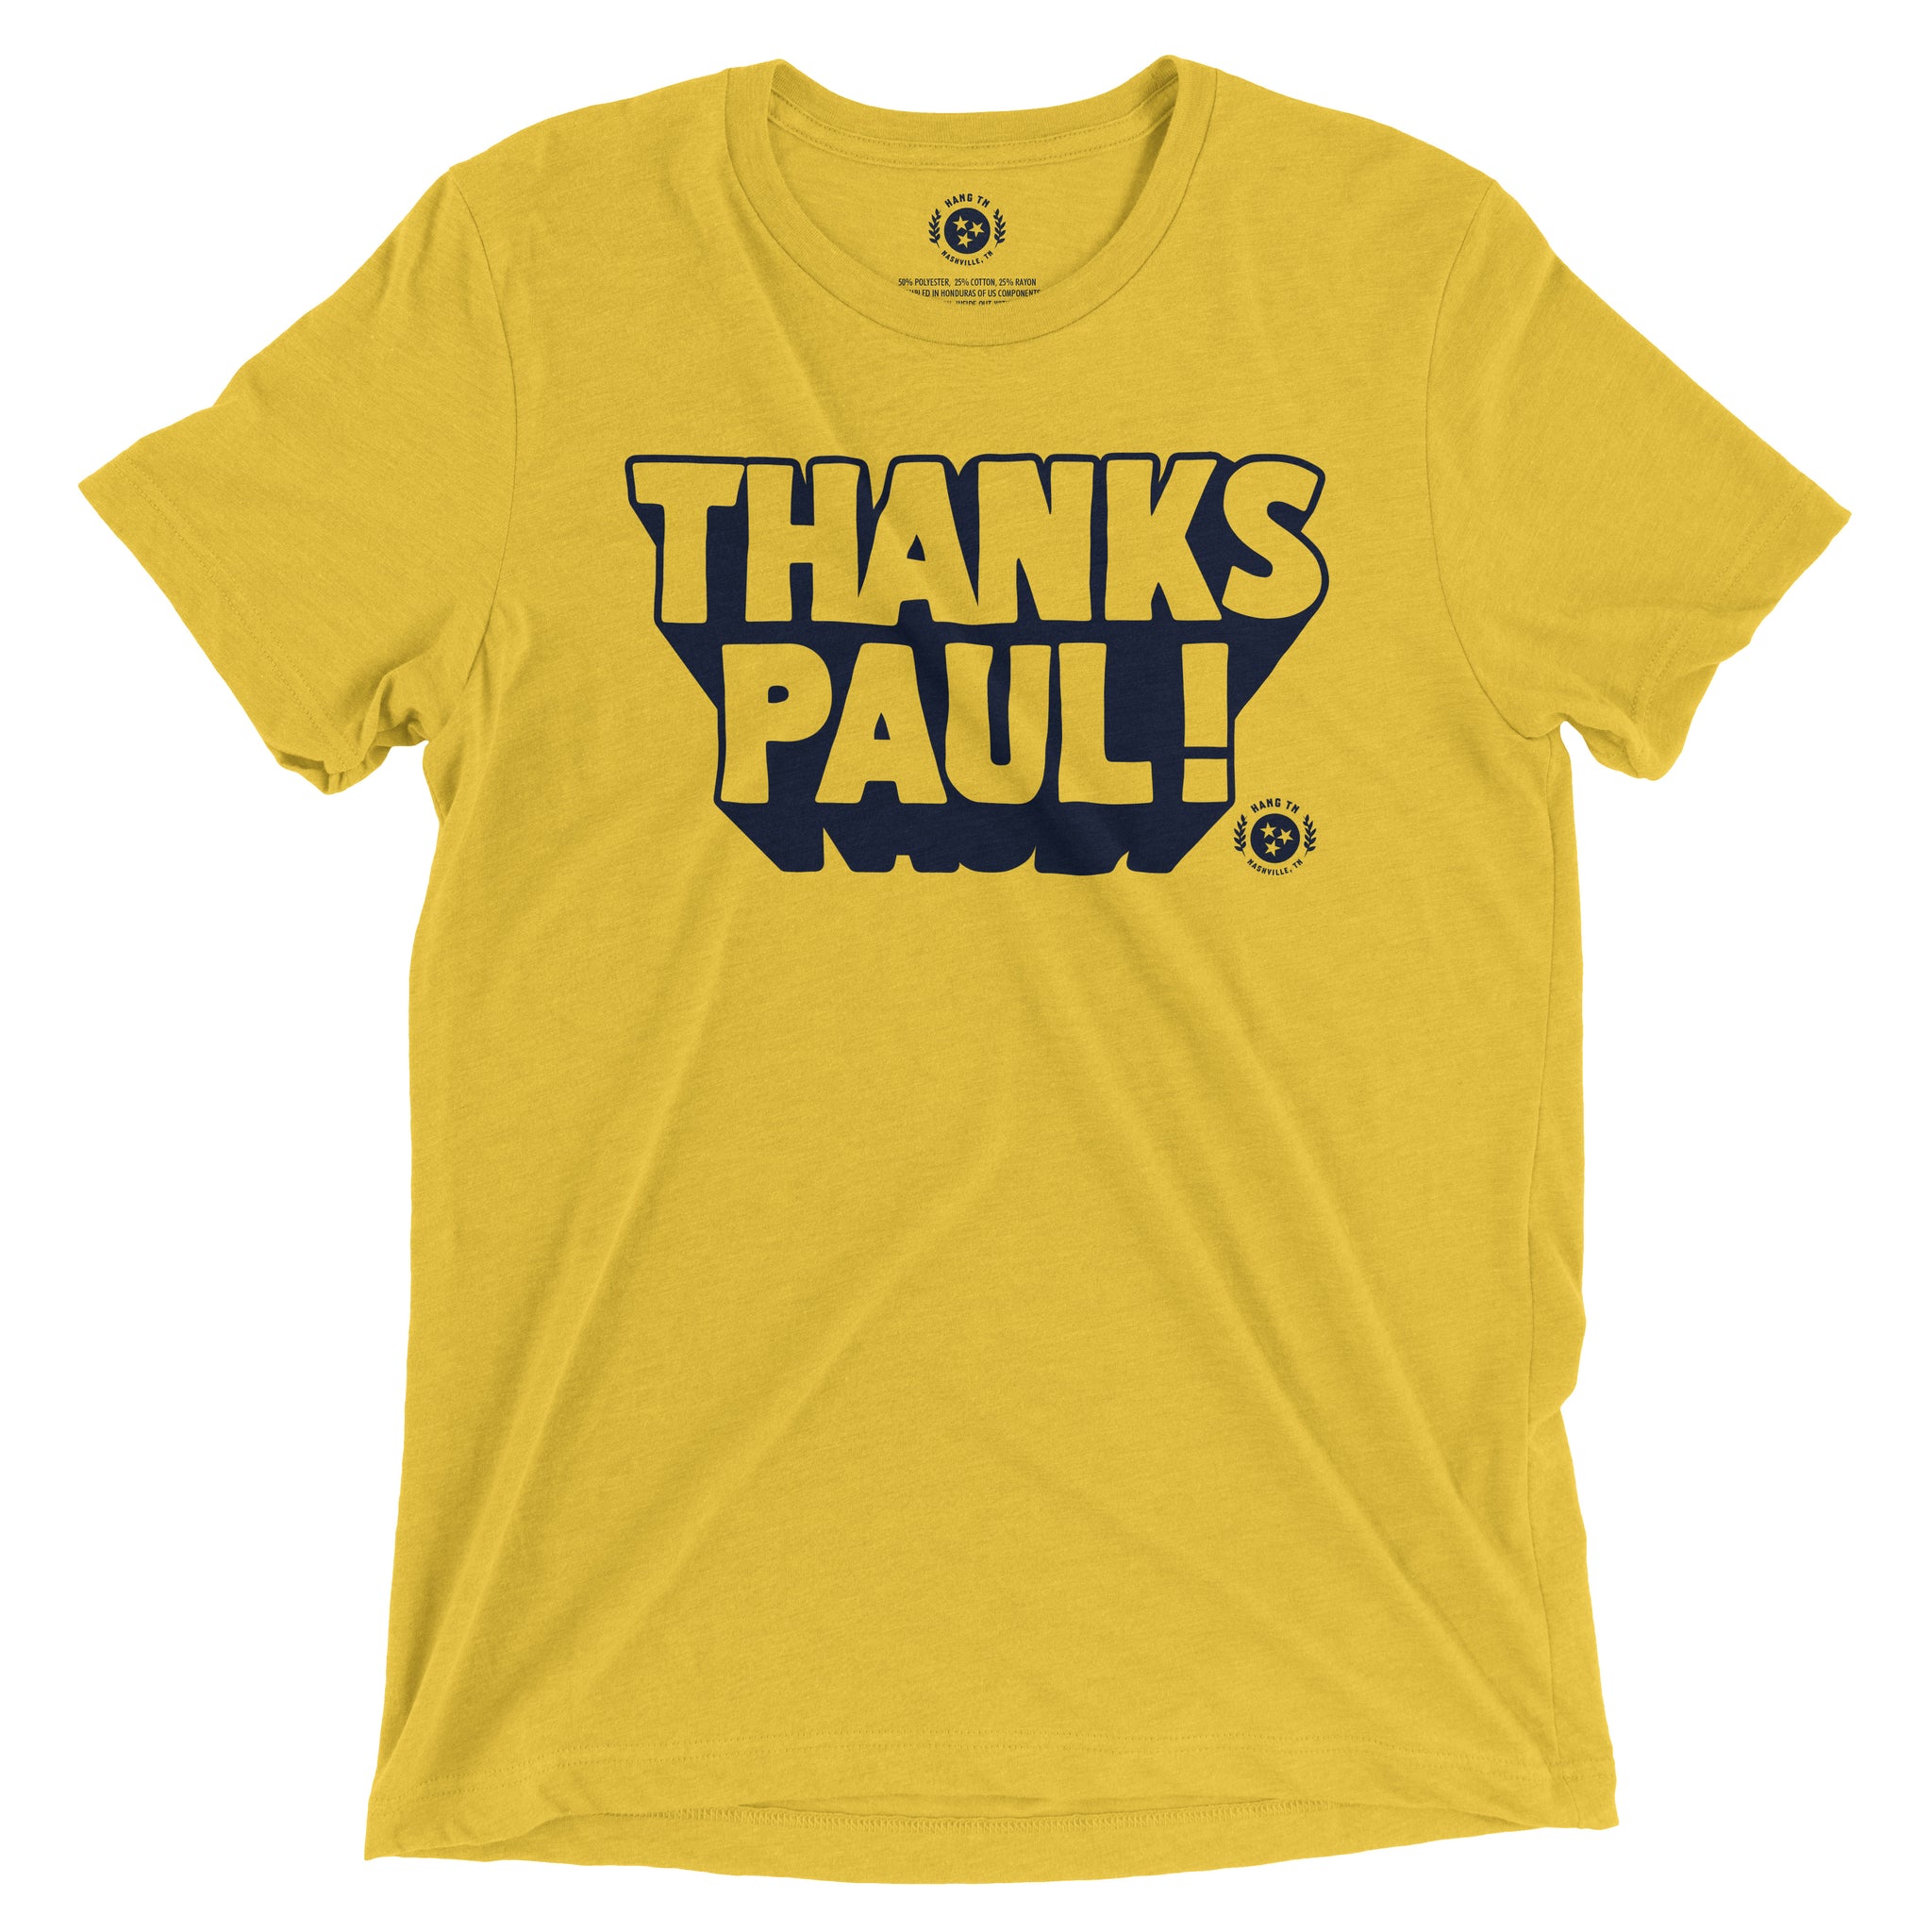 Thanks Paul!